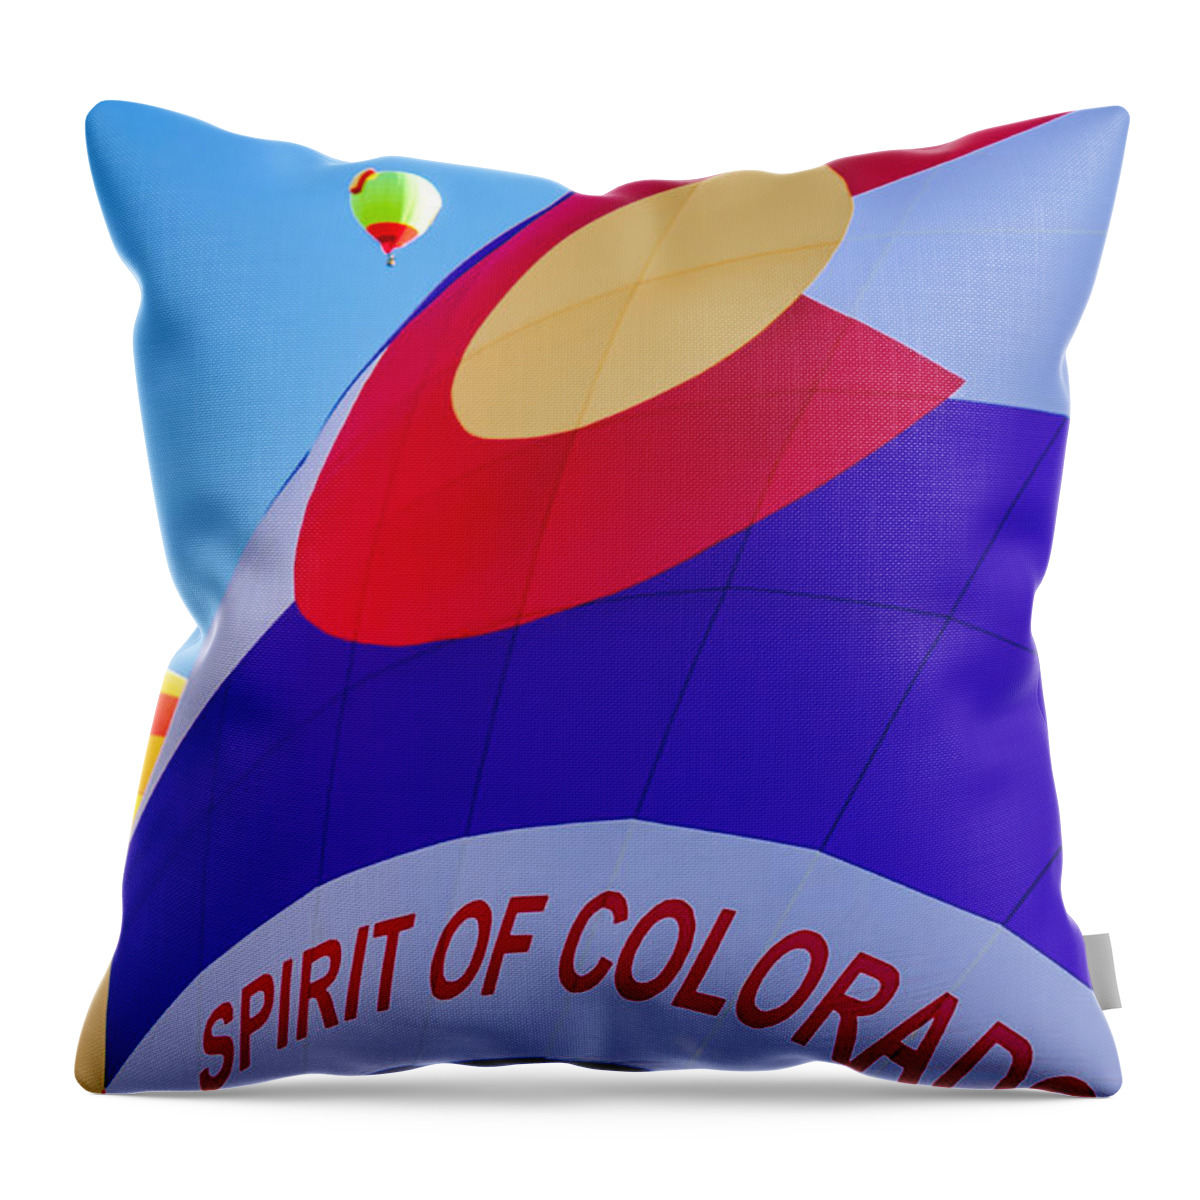 Colorado Throw Pillow featuring the photograph Spirit of Colorado Proud by Teri Virbickis